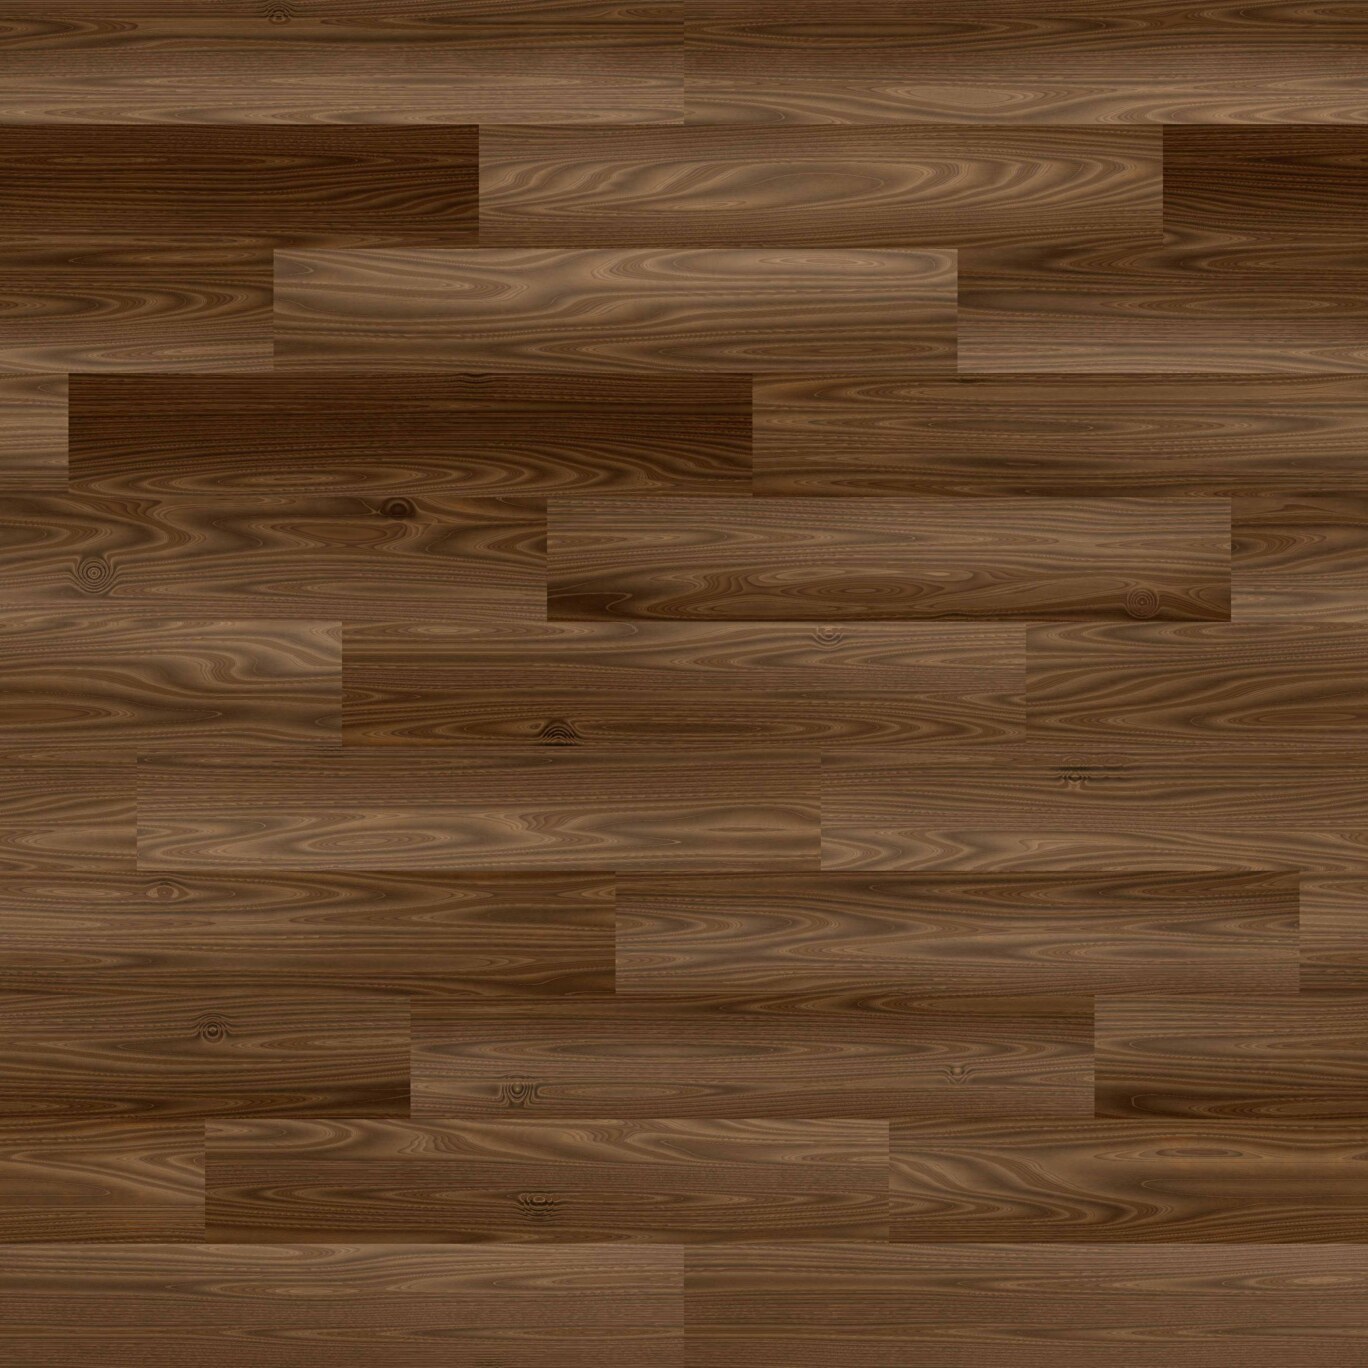 Dark Wood Floor Parquet seamless PBR 3D Texture High Resolution